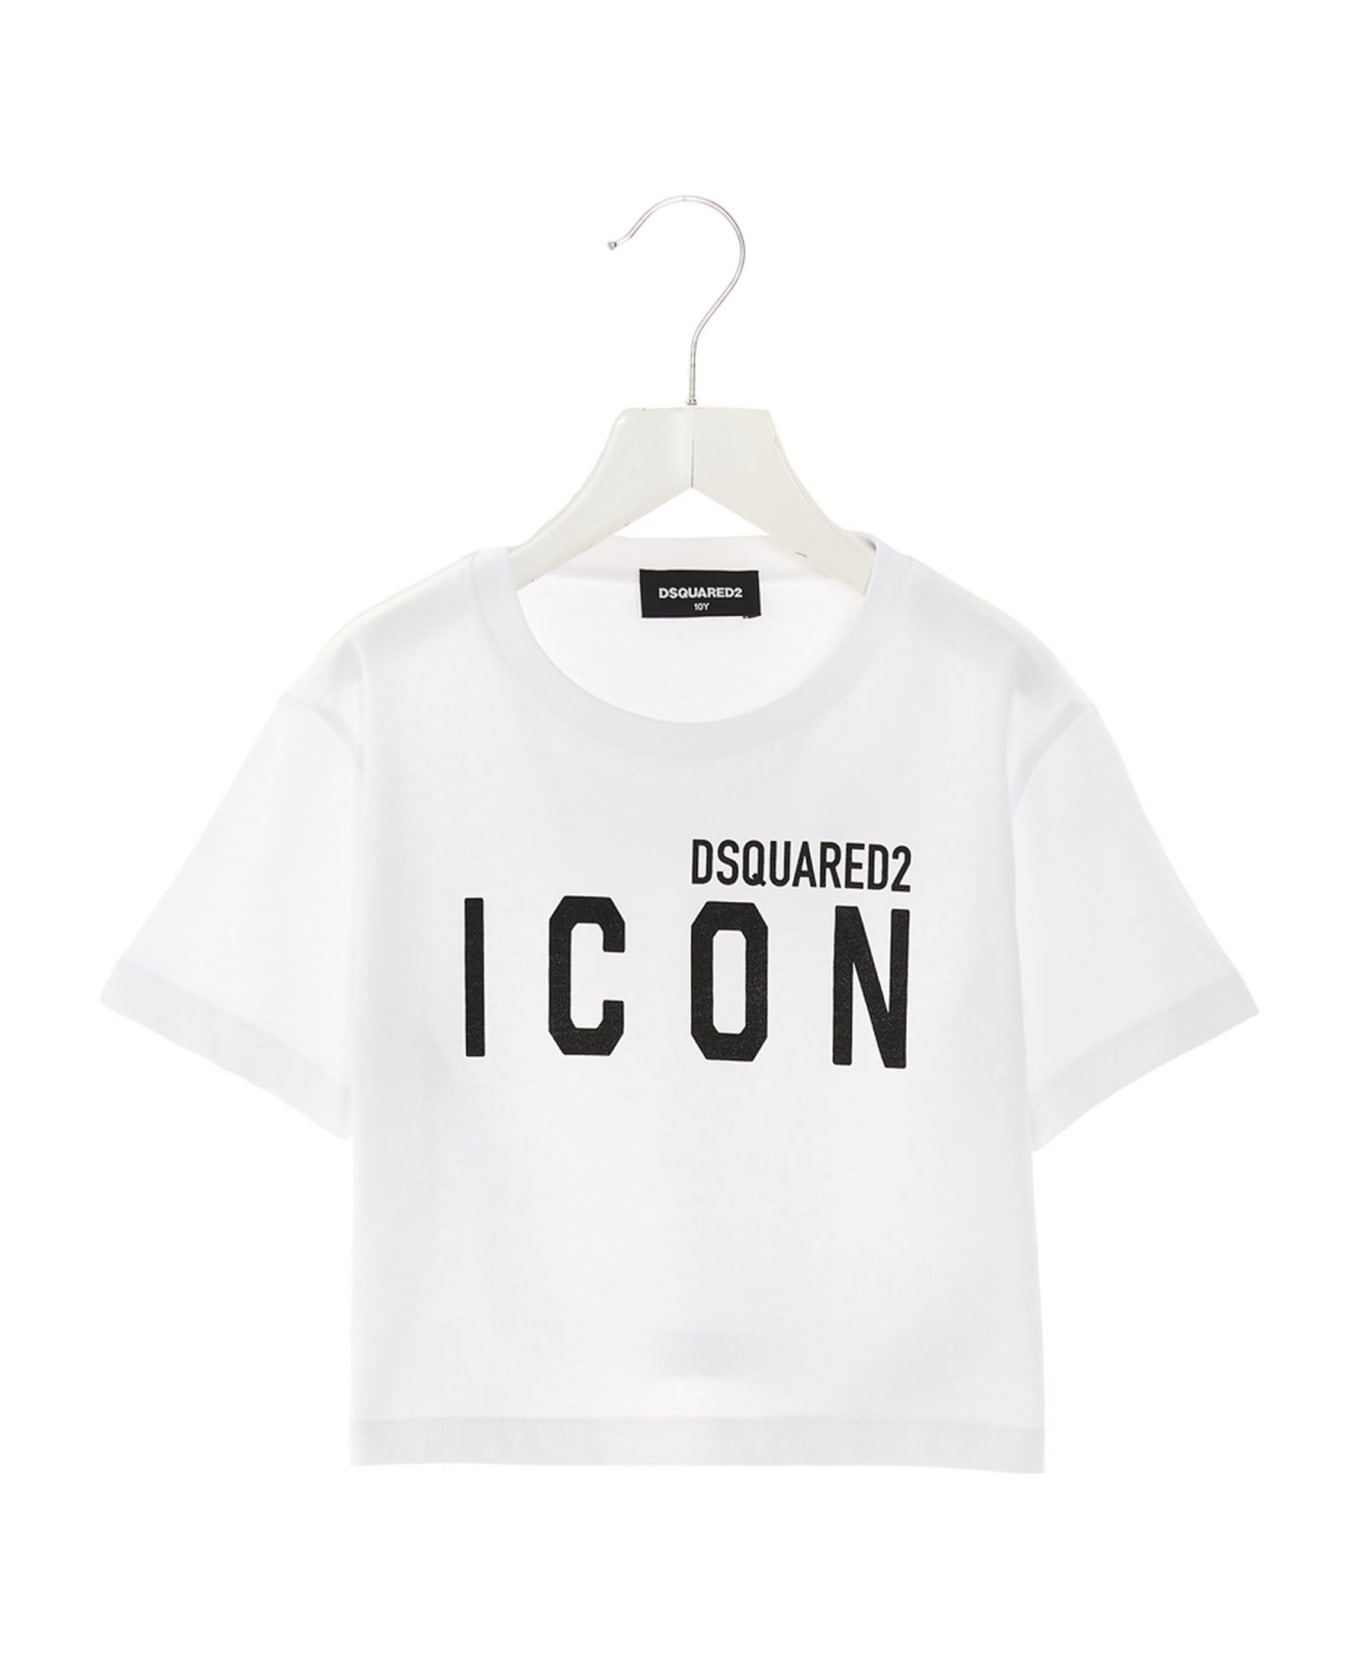 Dsquared2 'icon  T-shirt - White/Black